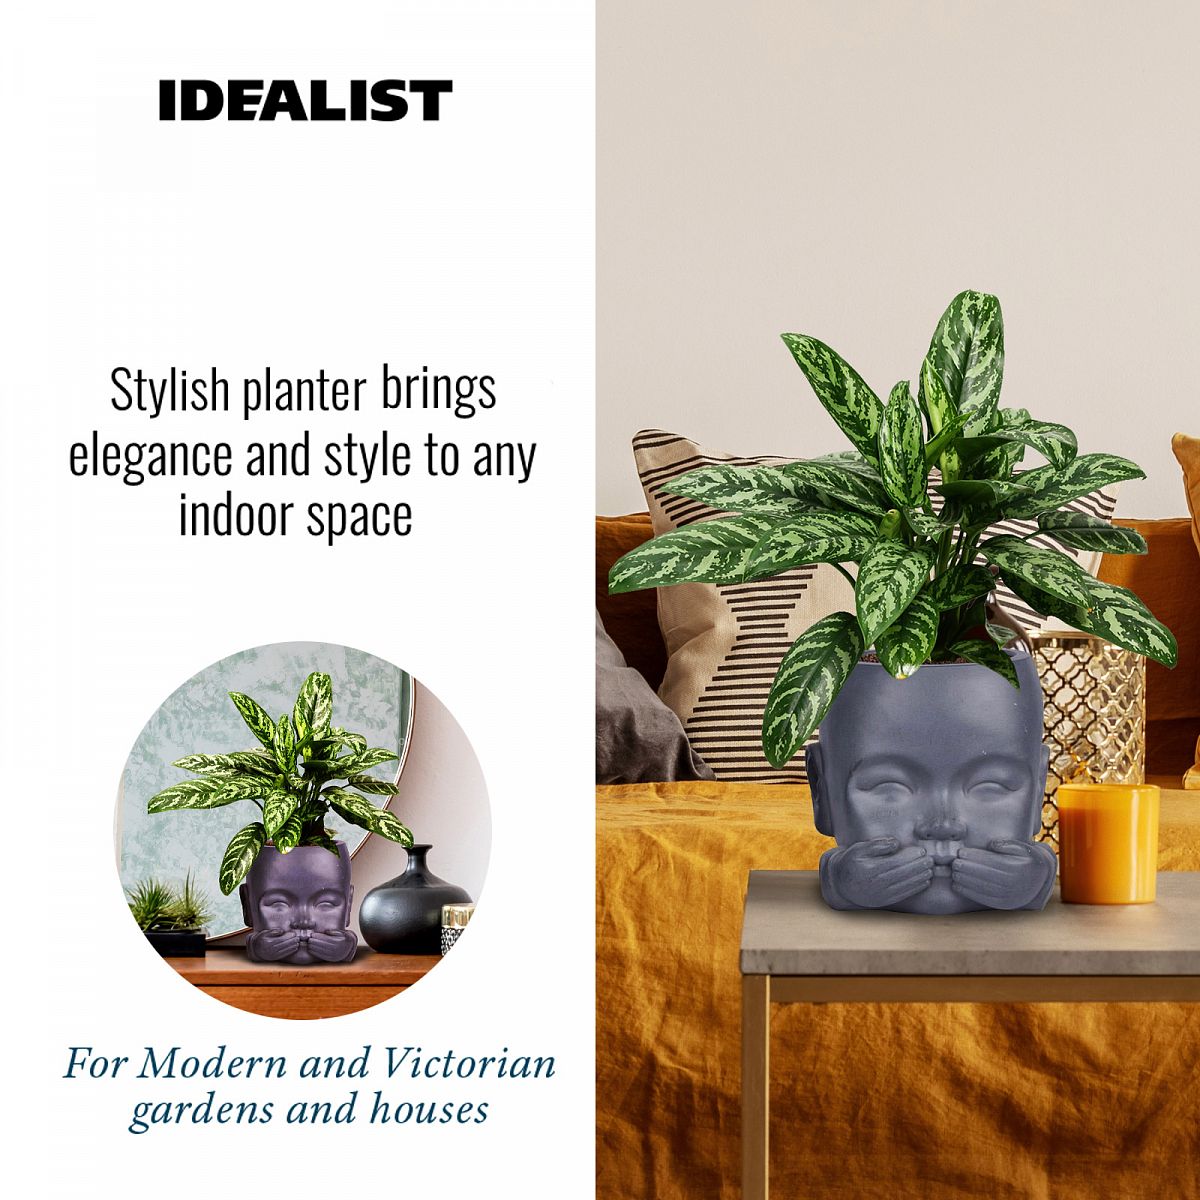 Baby Monk Speak No Evil Oval Face Plant Pot Indoor by Idealist Lite